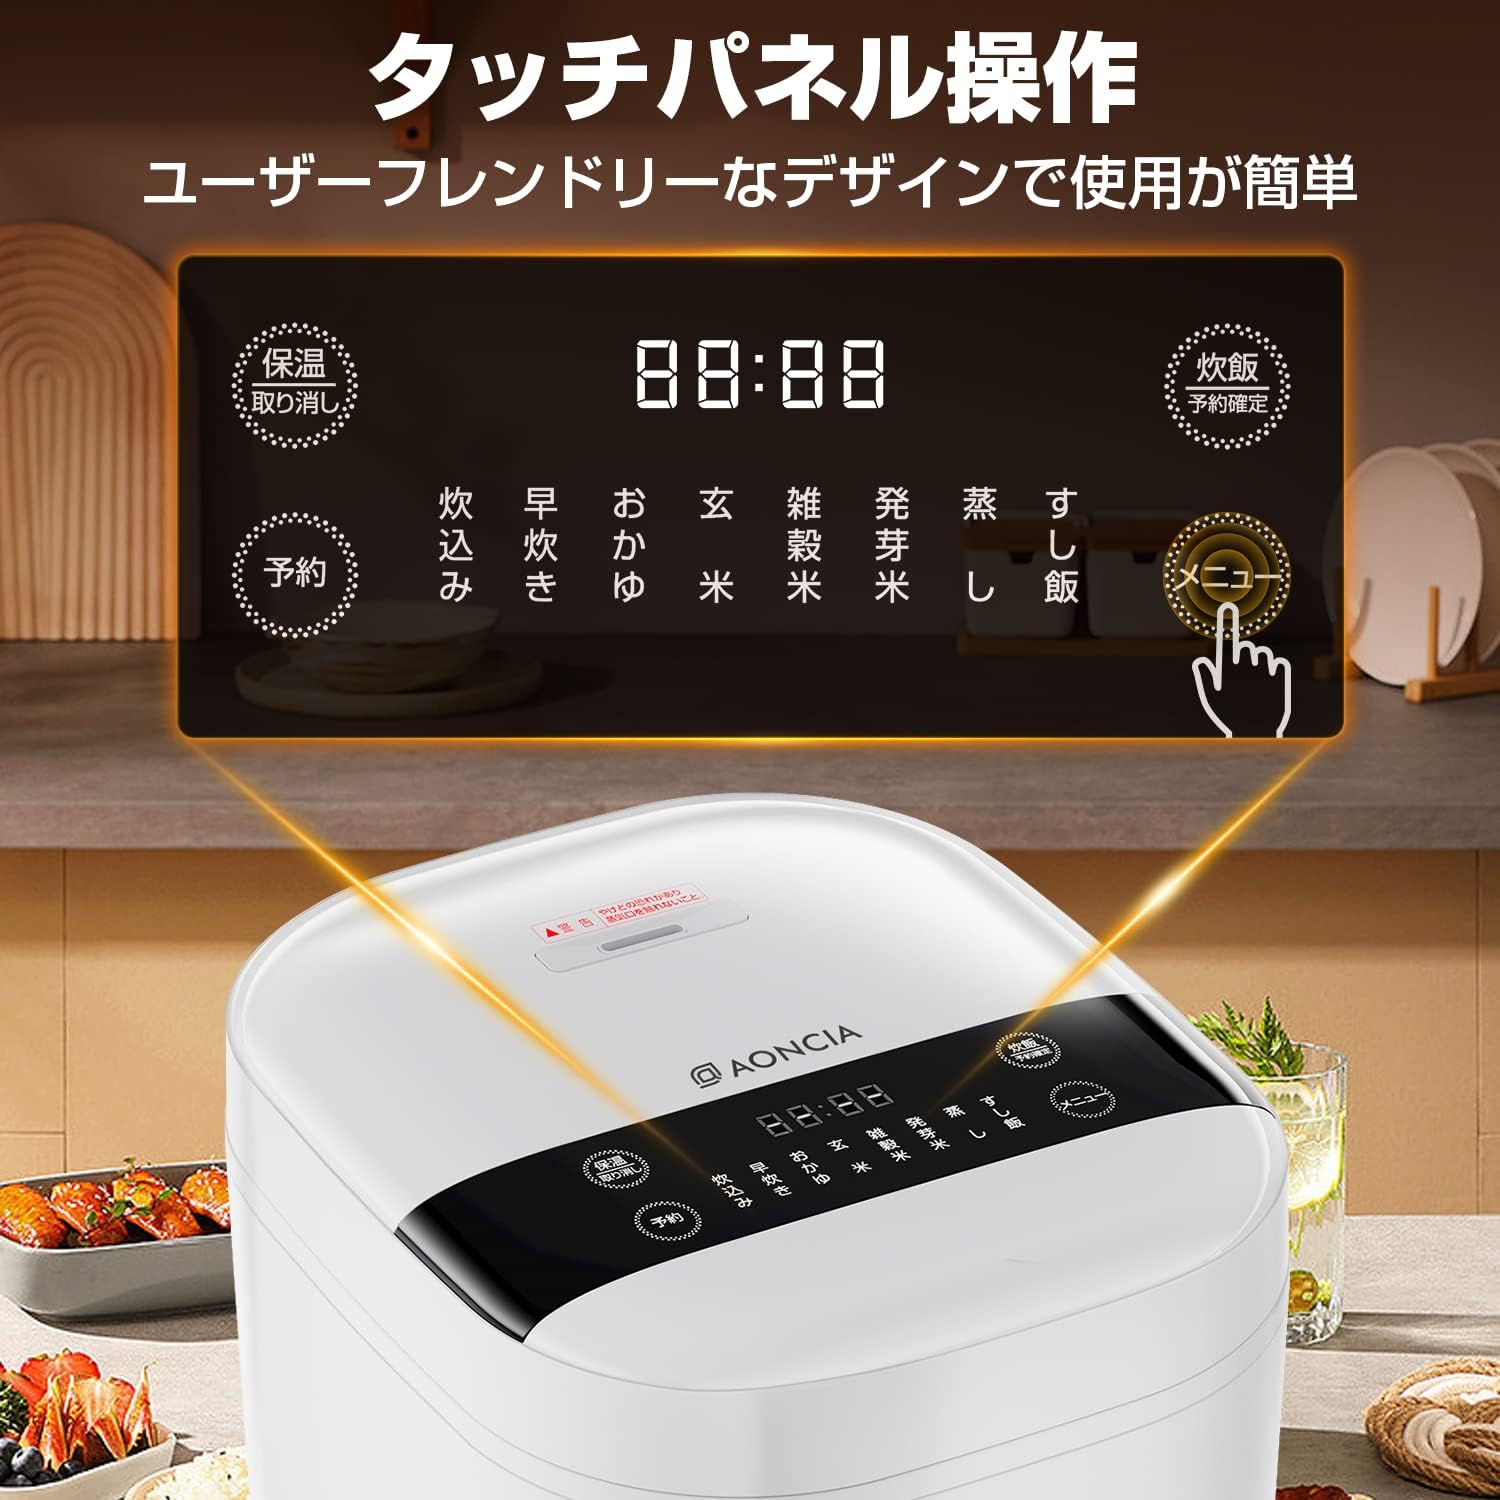 S-RC018F 炊飯器3合炊き